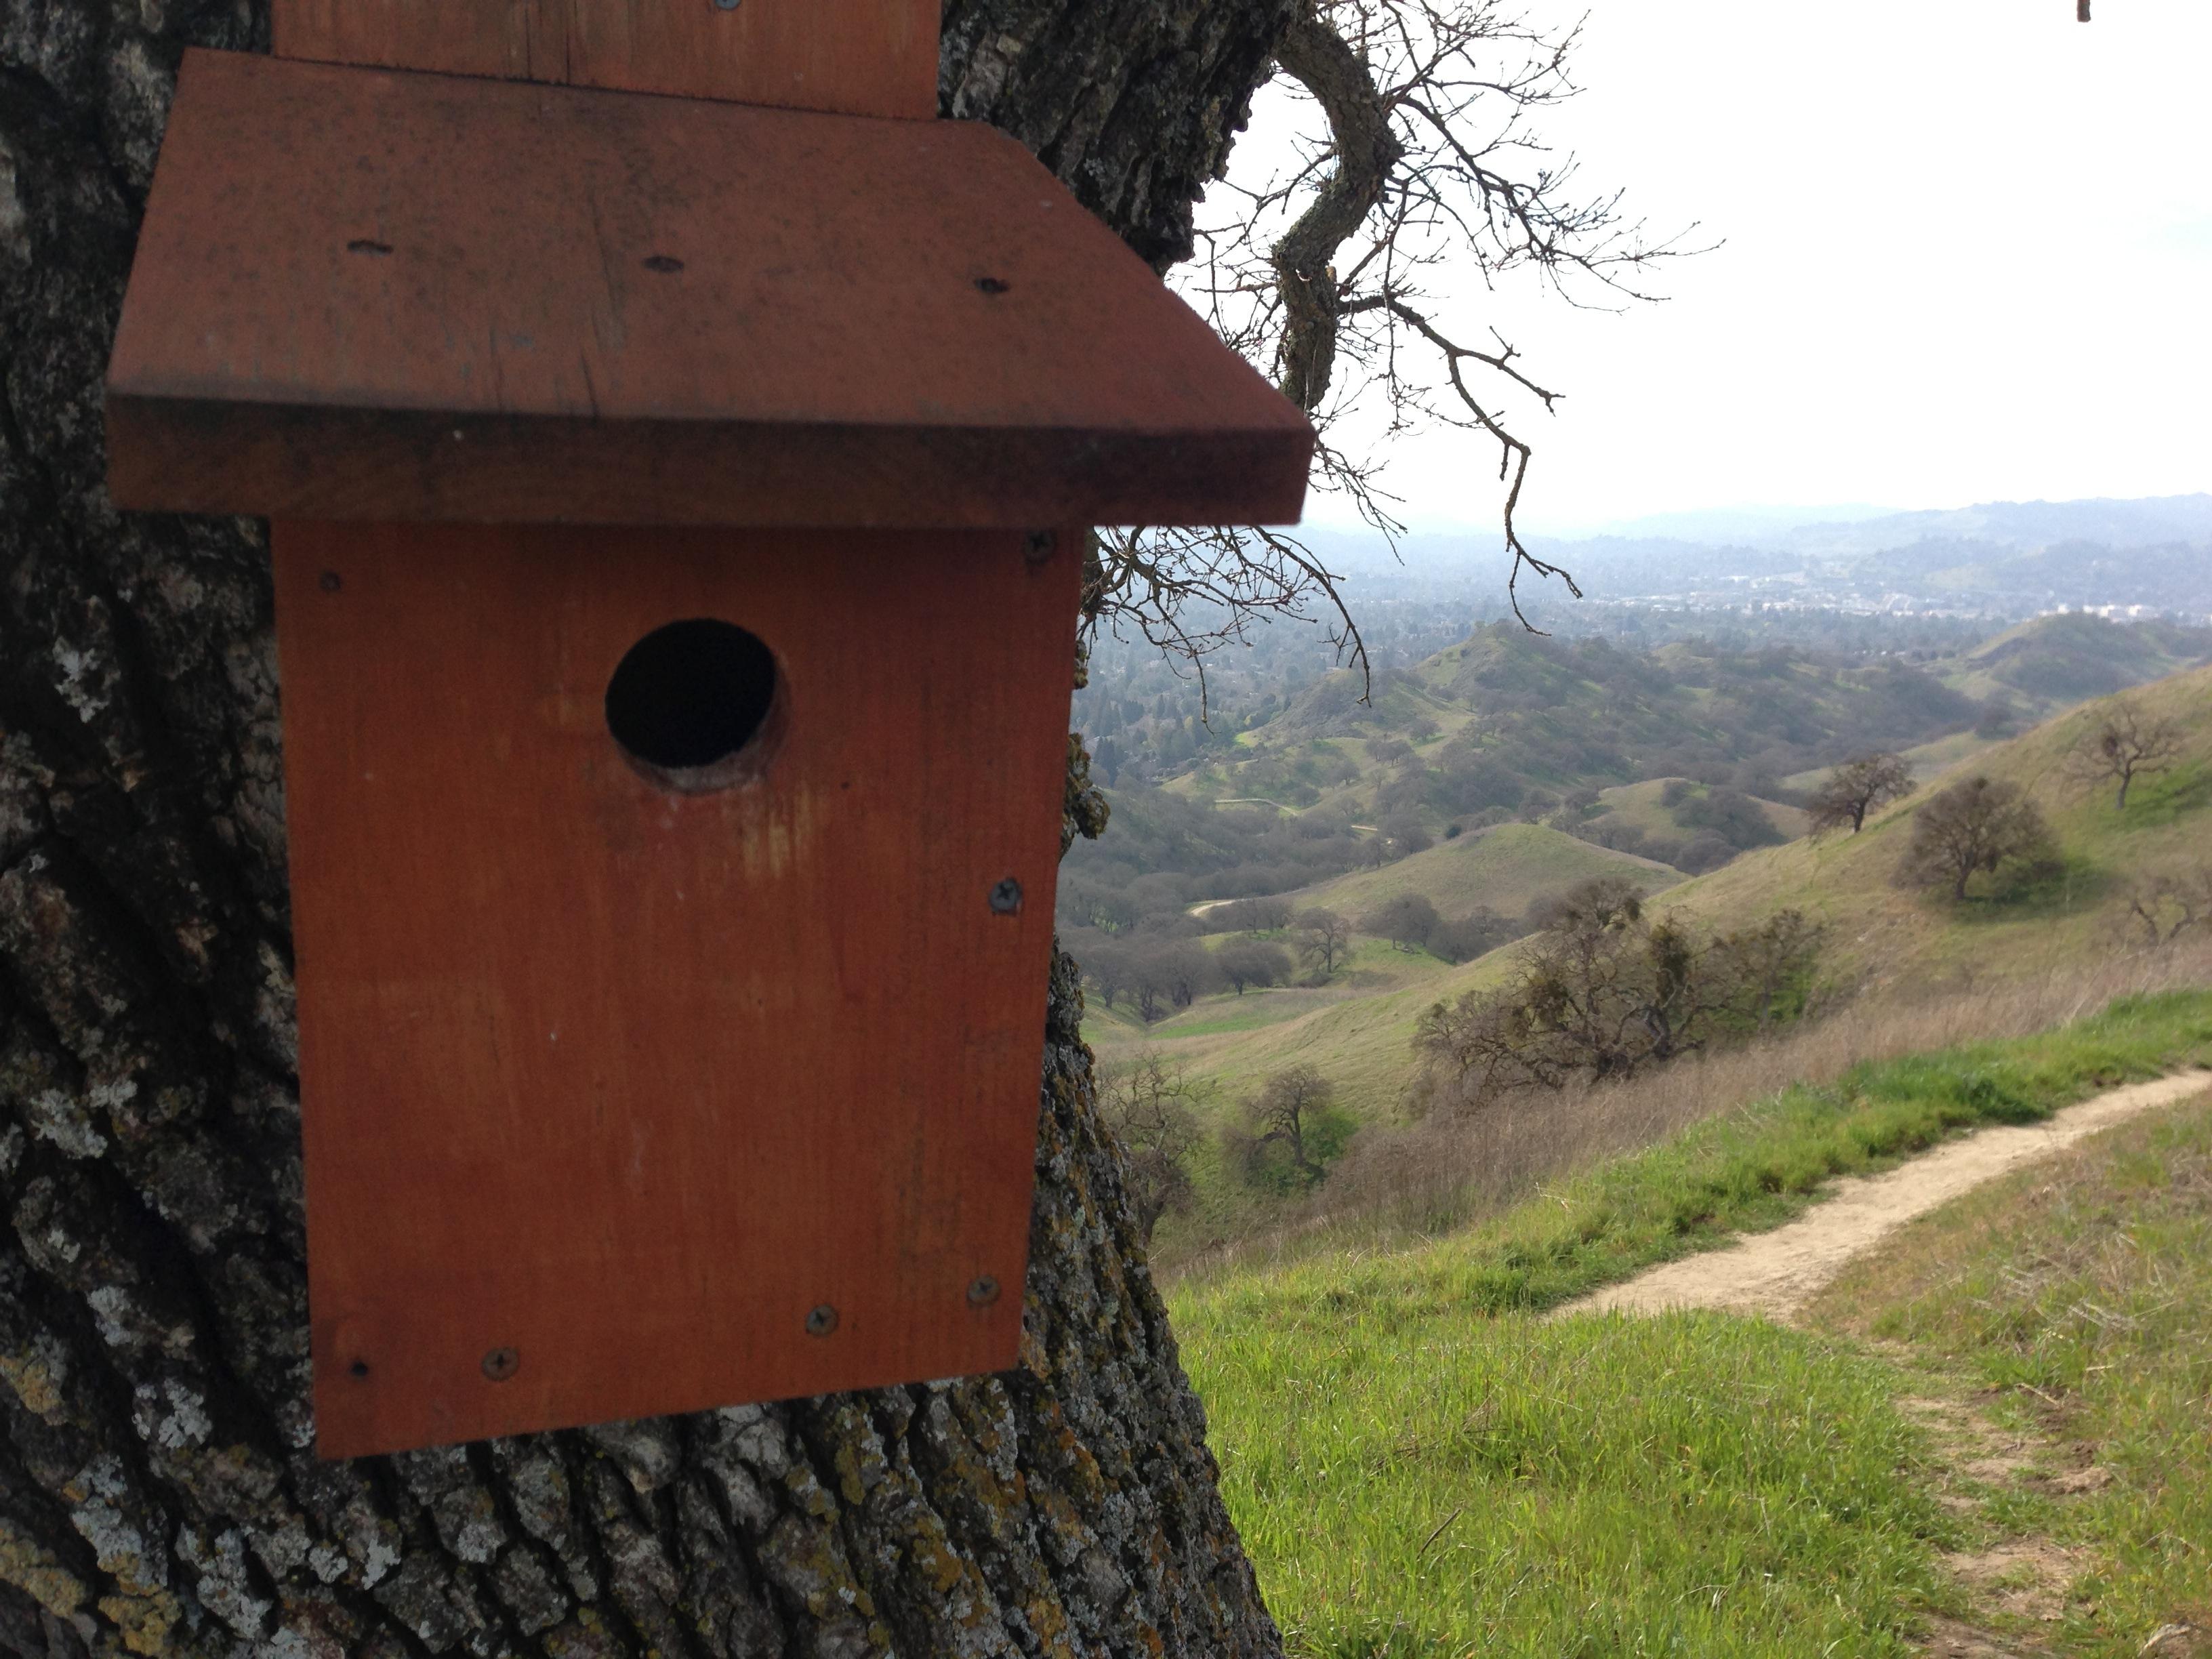 Bluebird box on Ridgetop trail